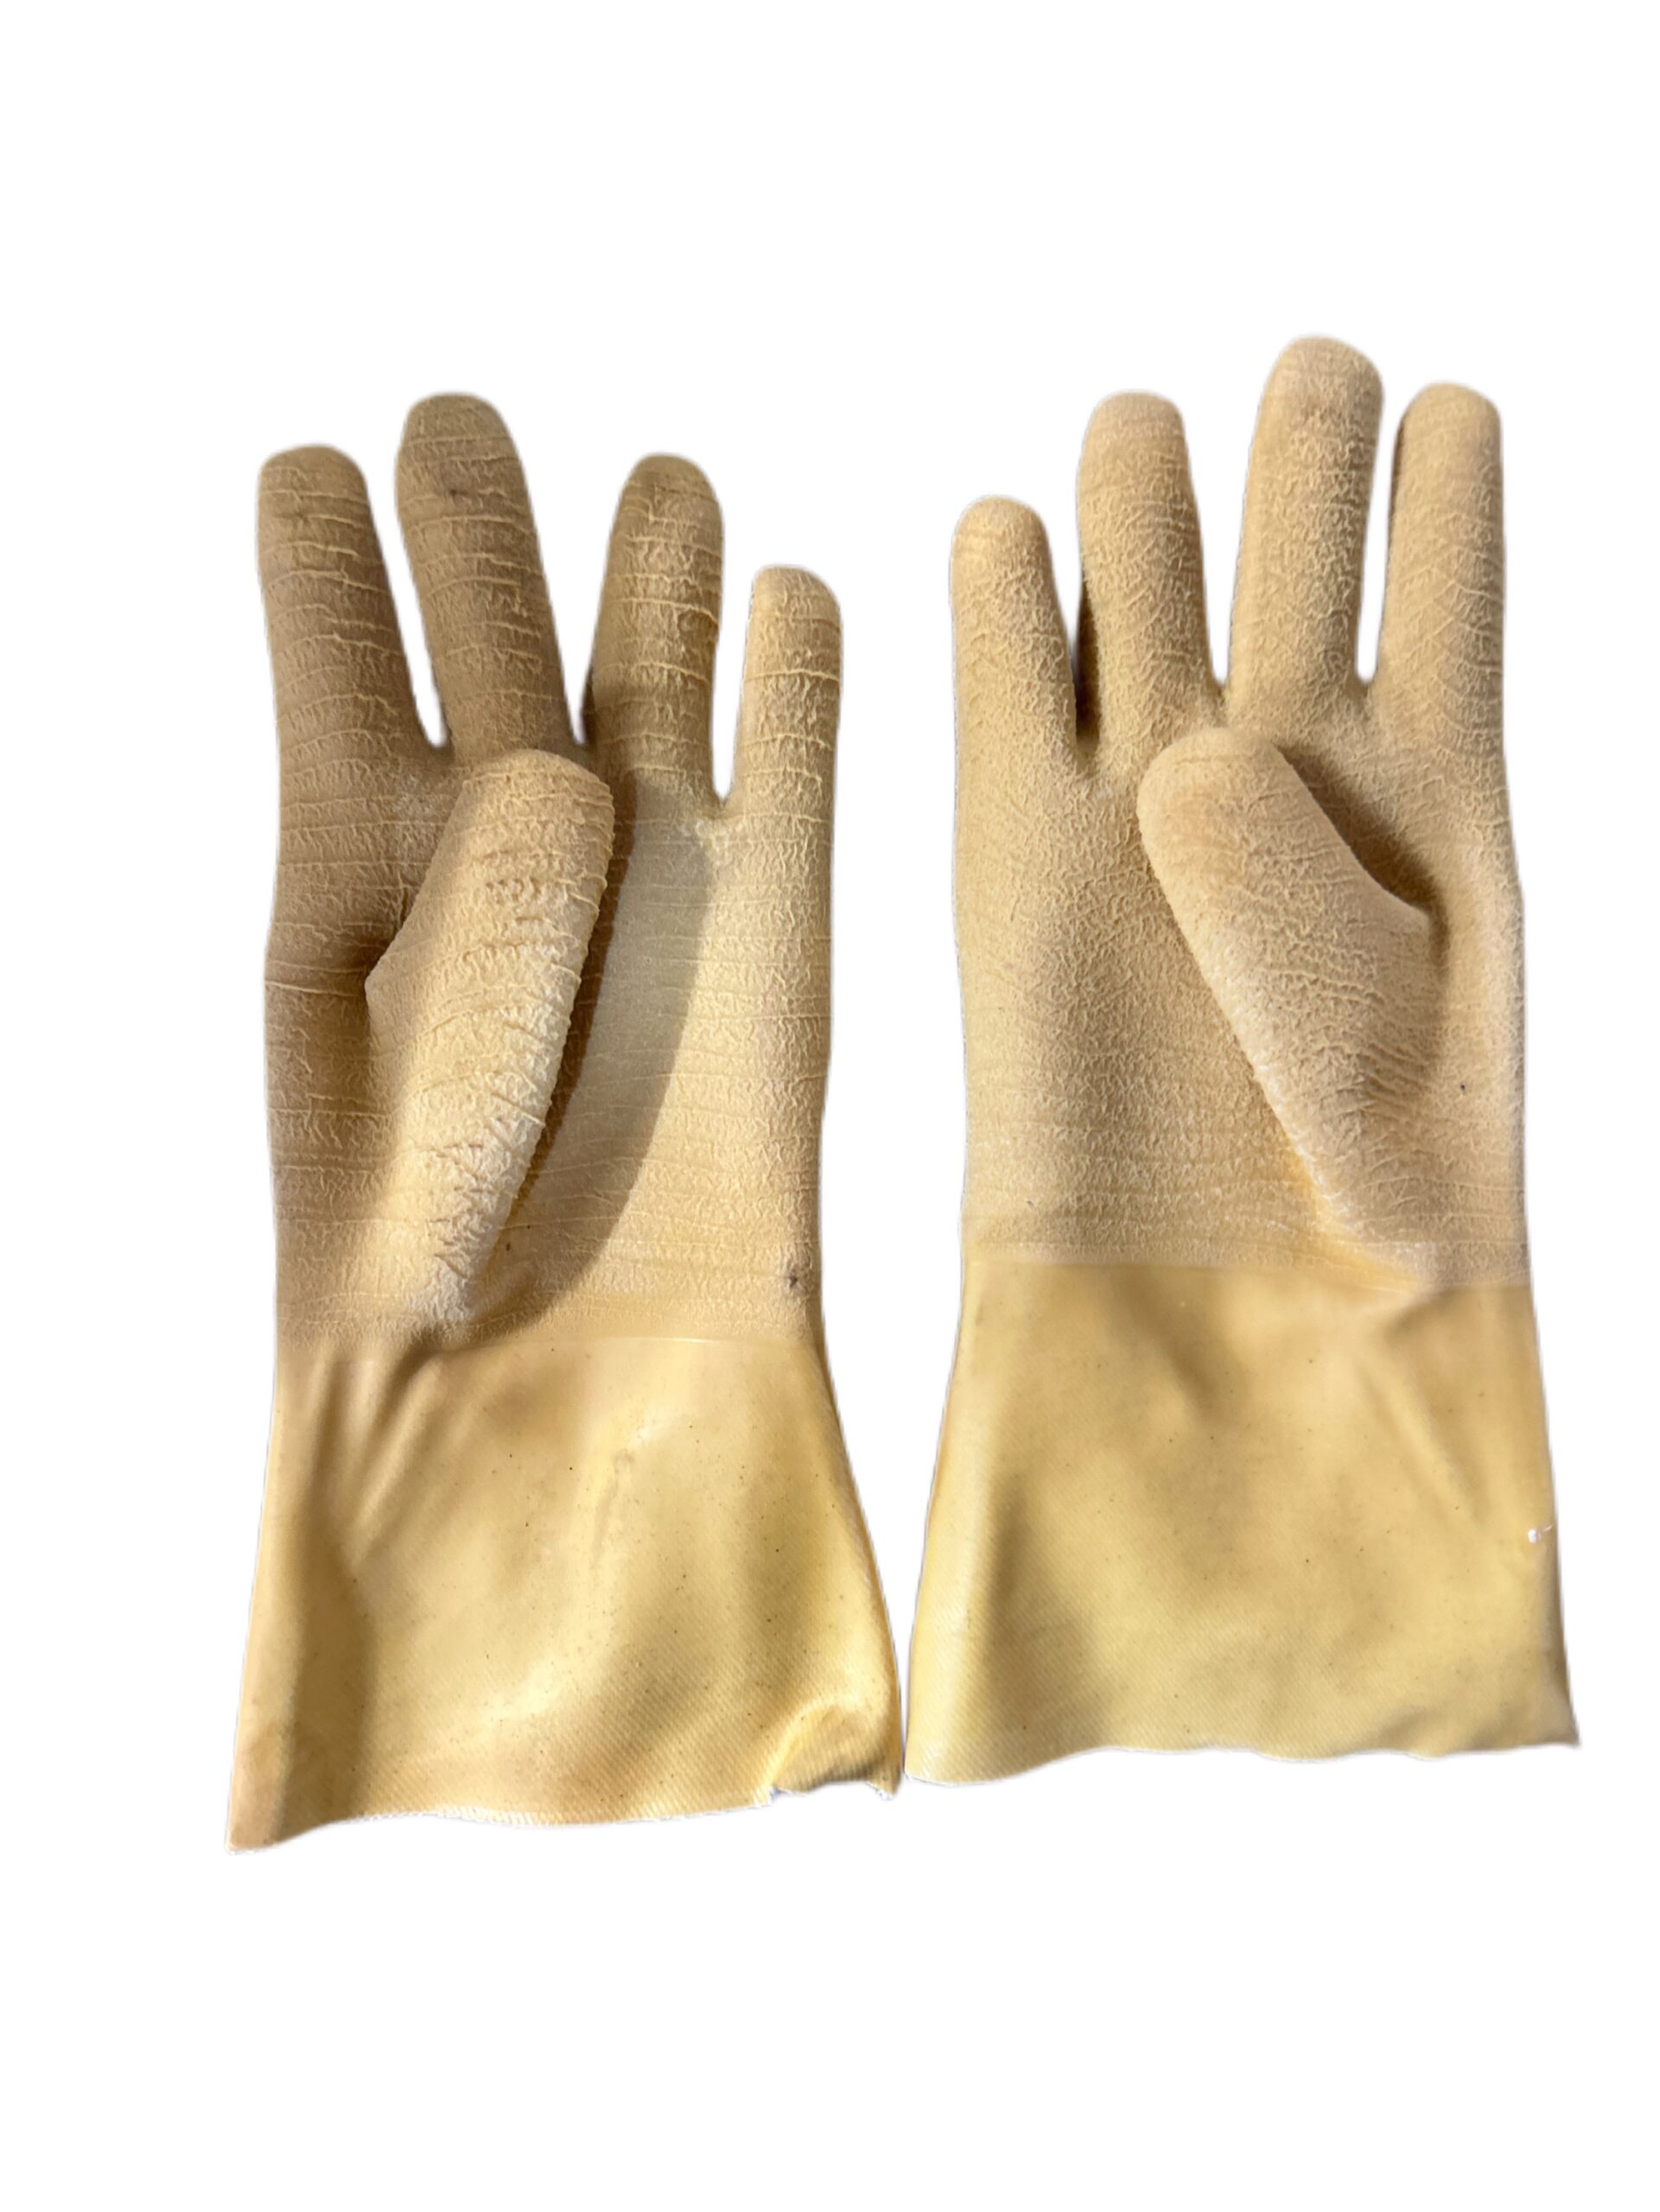 Culling Gloves Commercial Grade